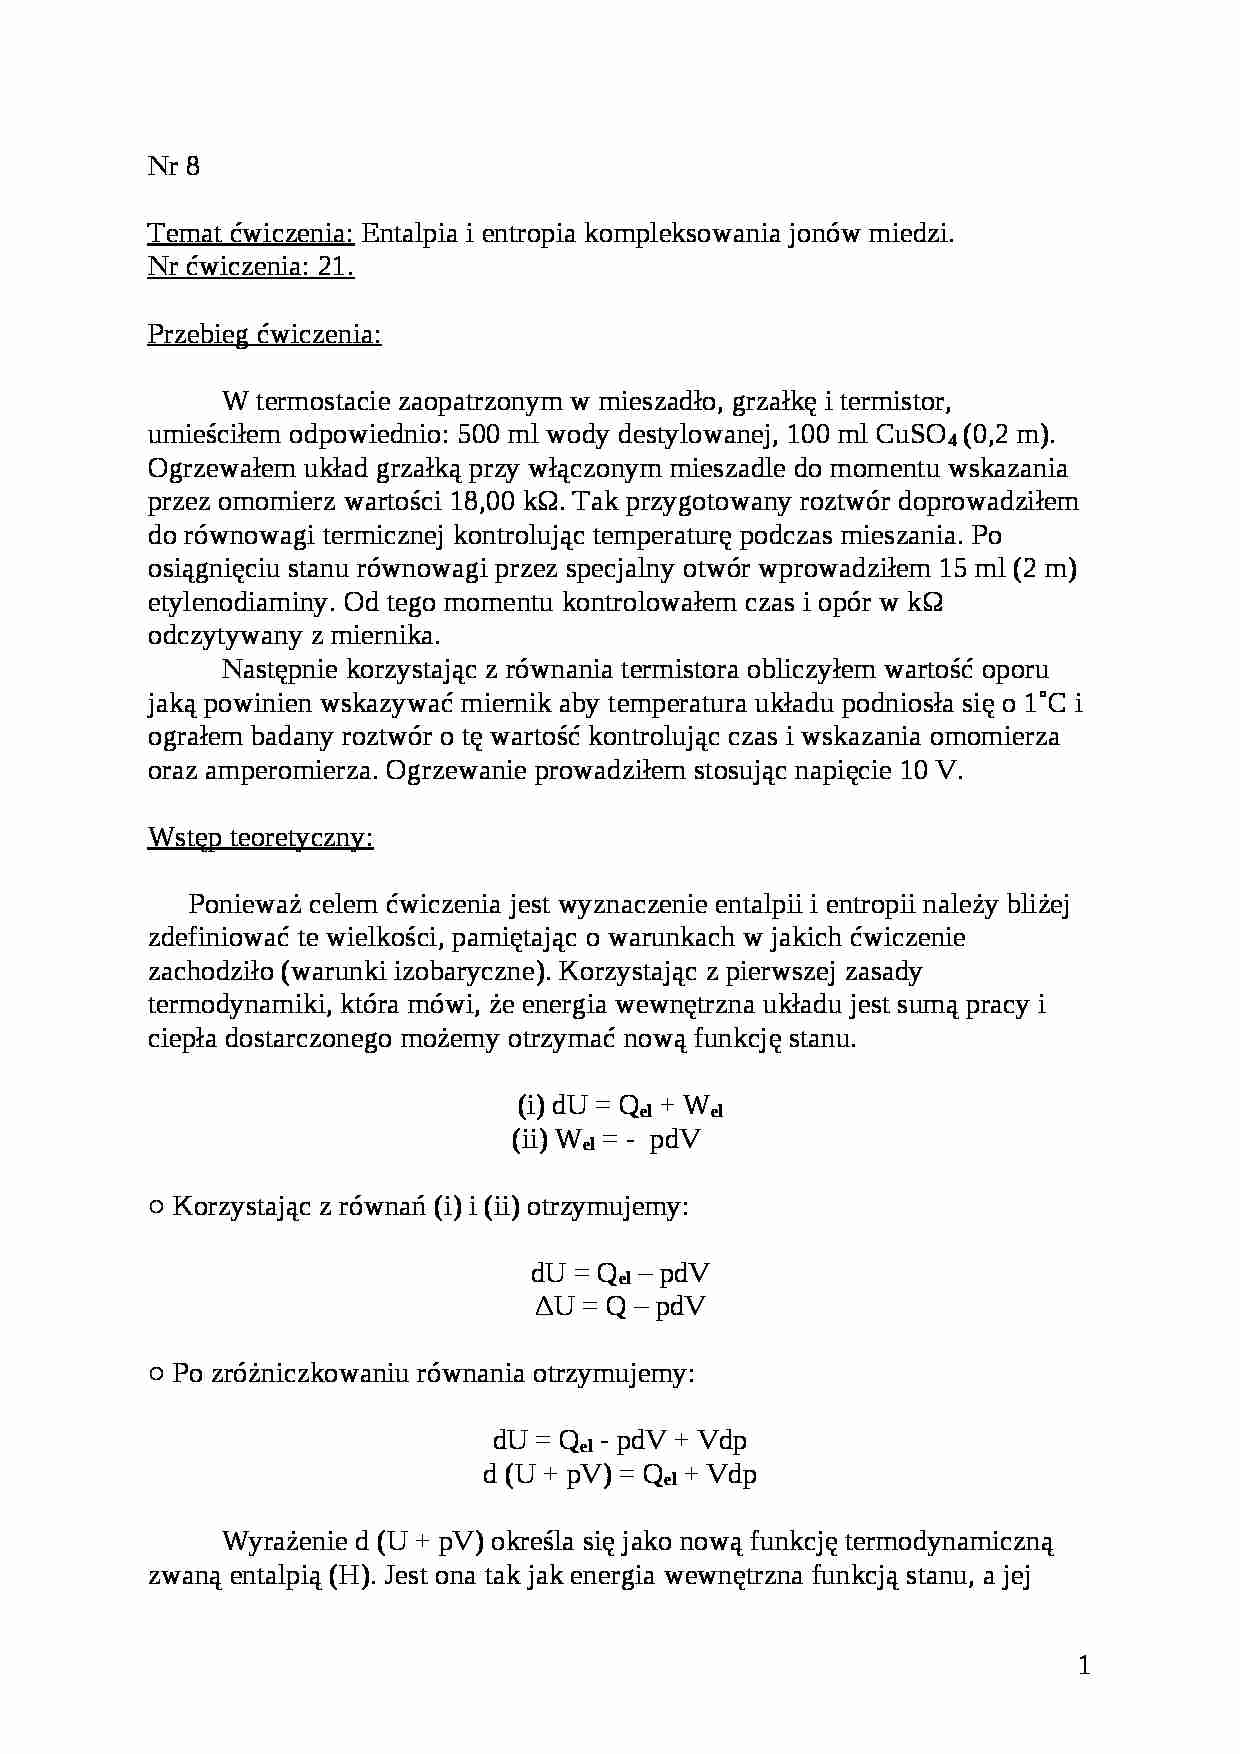 Entalpia i entropia kompleksowania jonów miedzi - strona 1